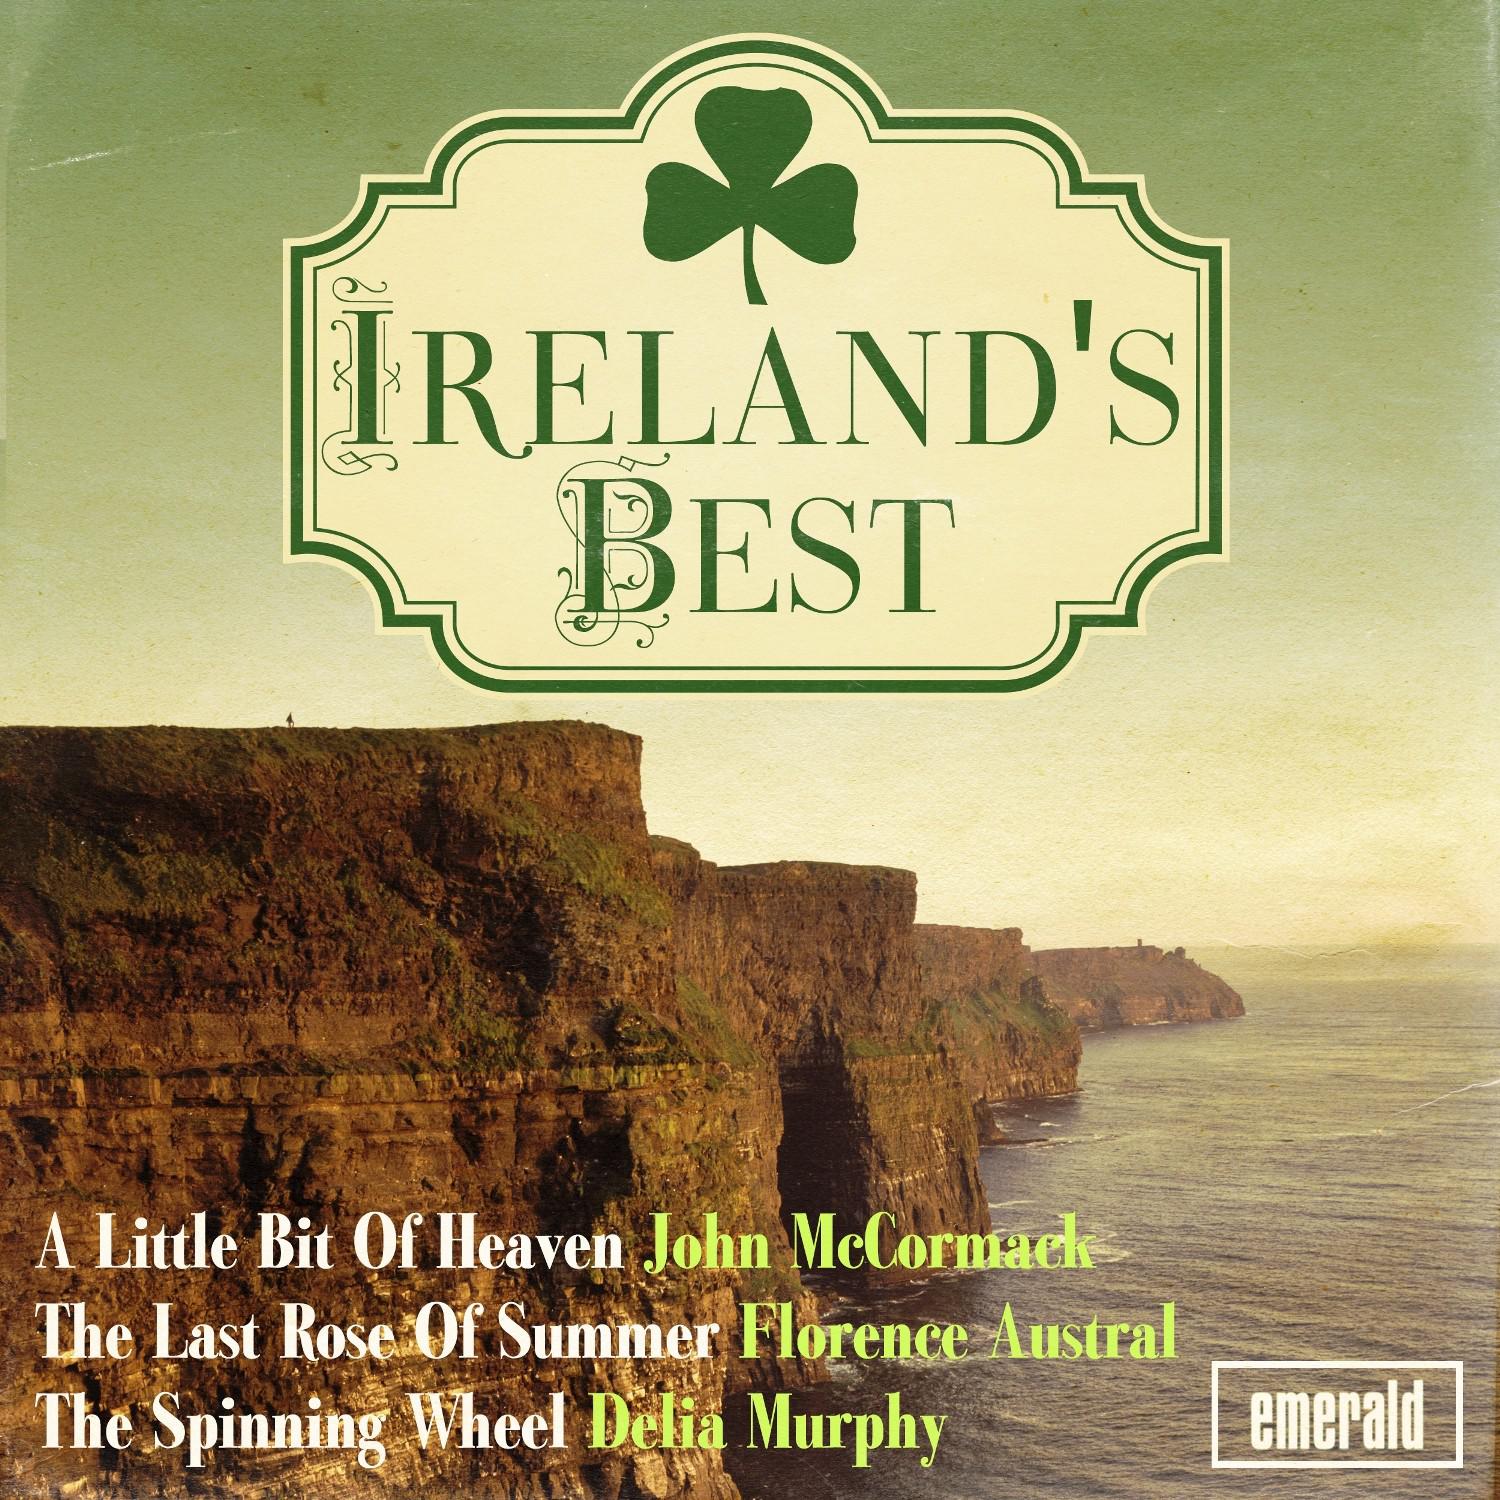 Ireland's Best